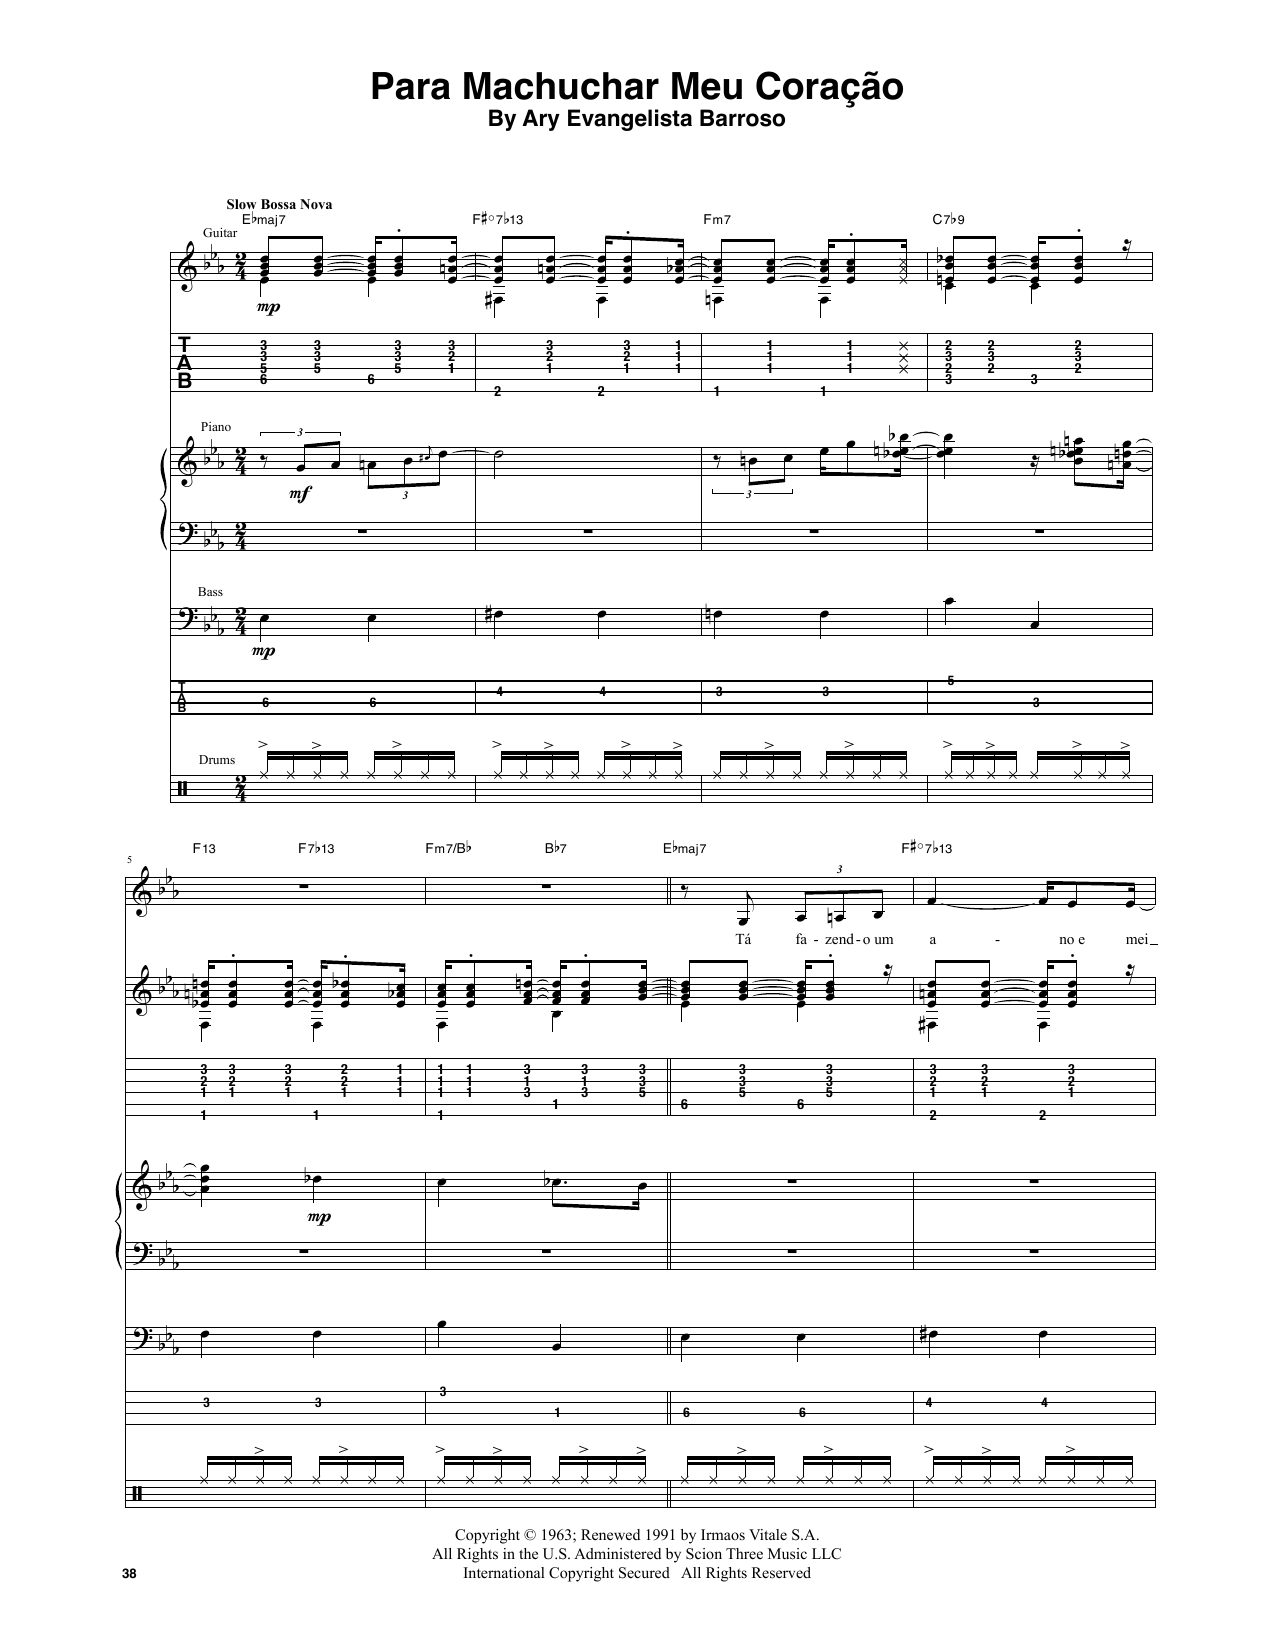 Stan Getz & João Gilberto Para Machuchar Meu Coracao Sheet Music Notes & Chords for Transcribed Score - Download or Print PDF